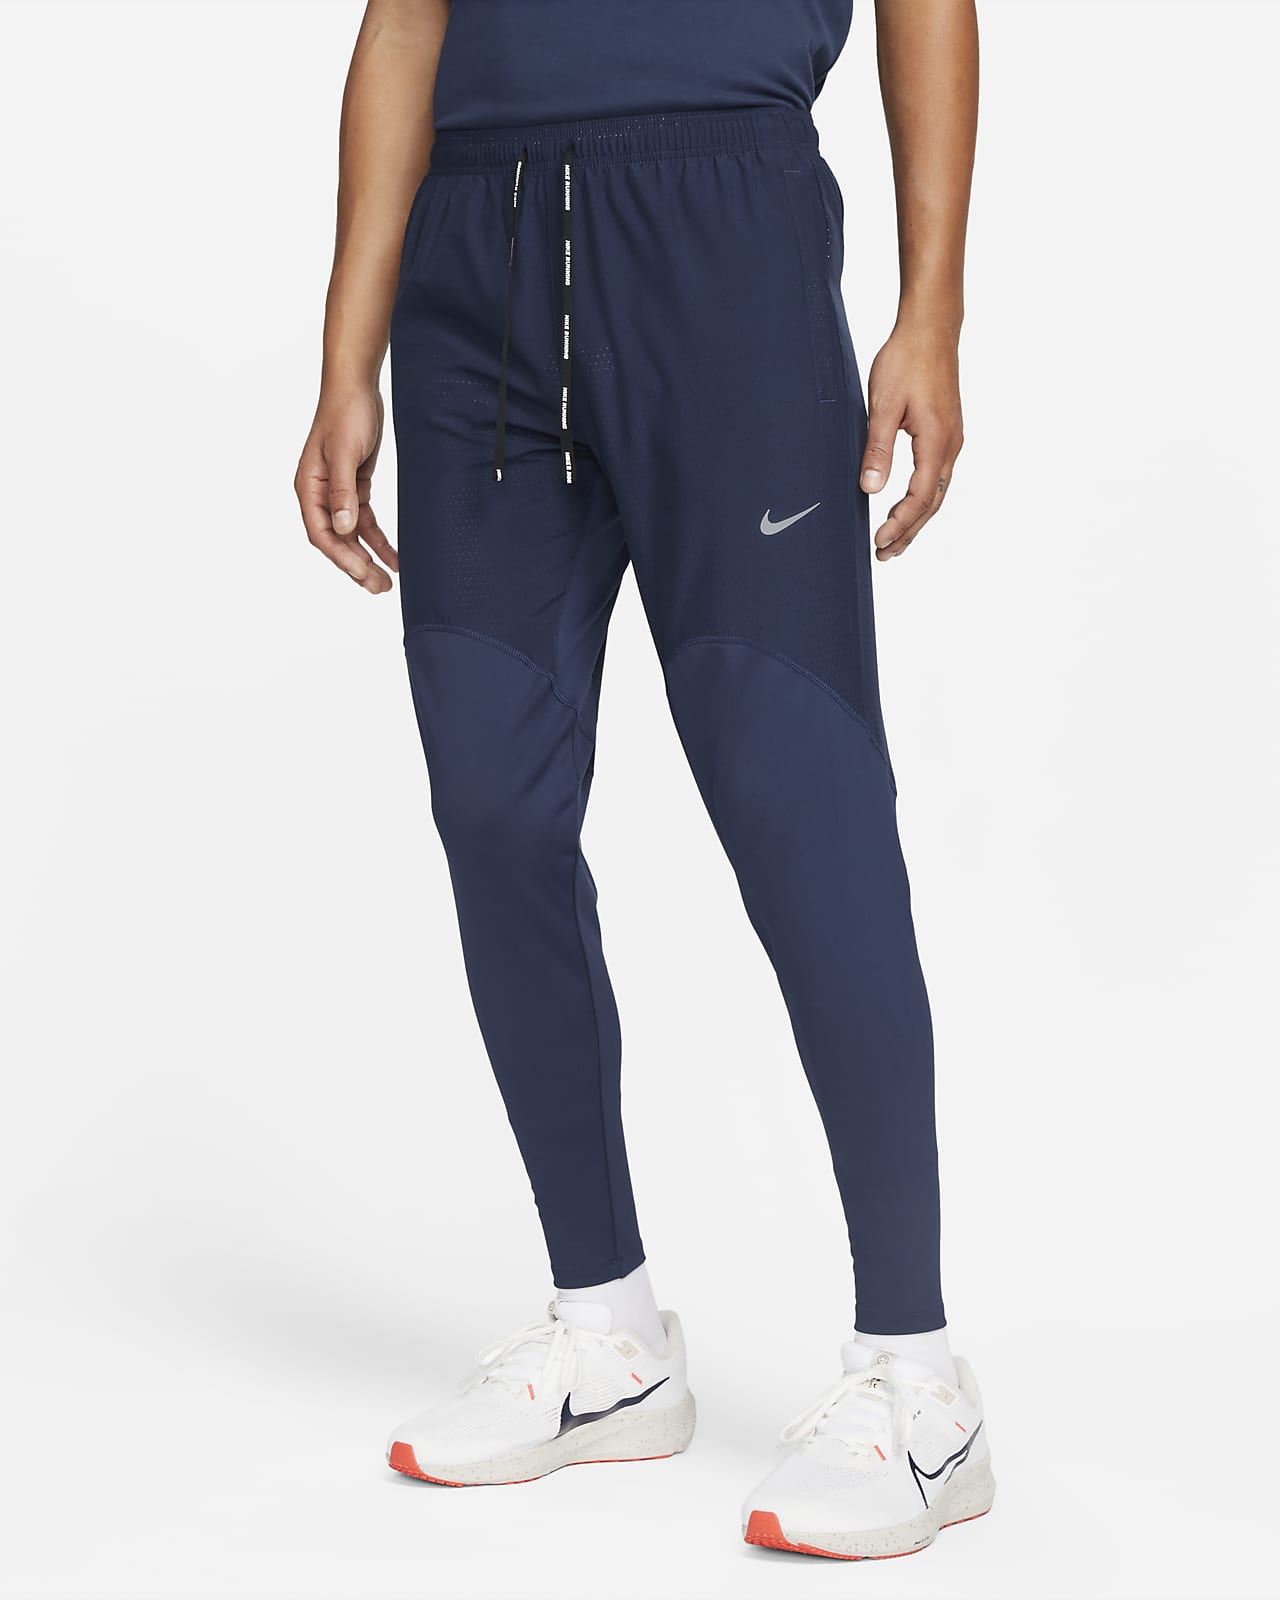 Amazon.com: Nike Men's Dry Fleece Training Pants, Black/White, Small :  Clothing, Shoes & Jewelry